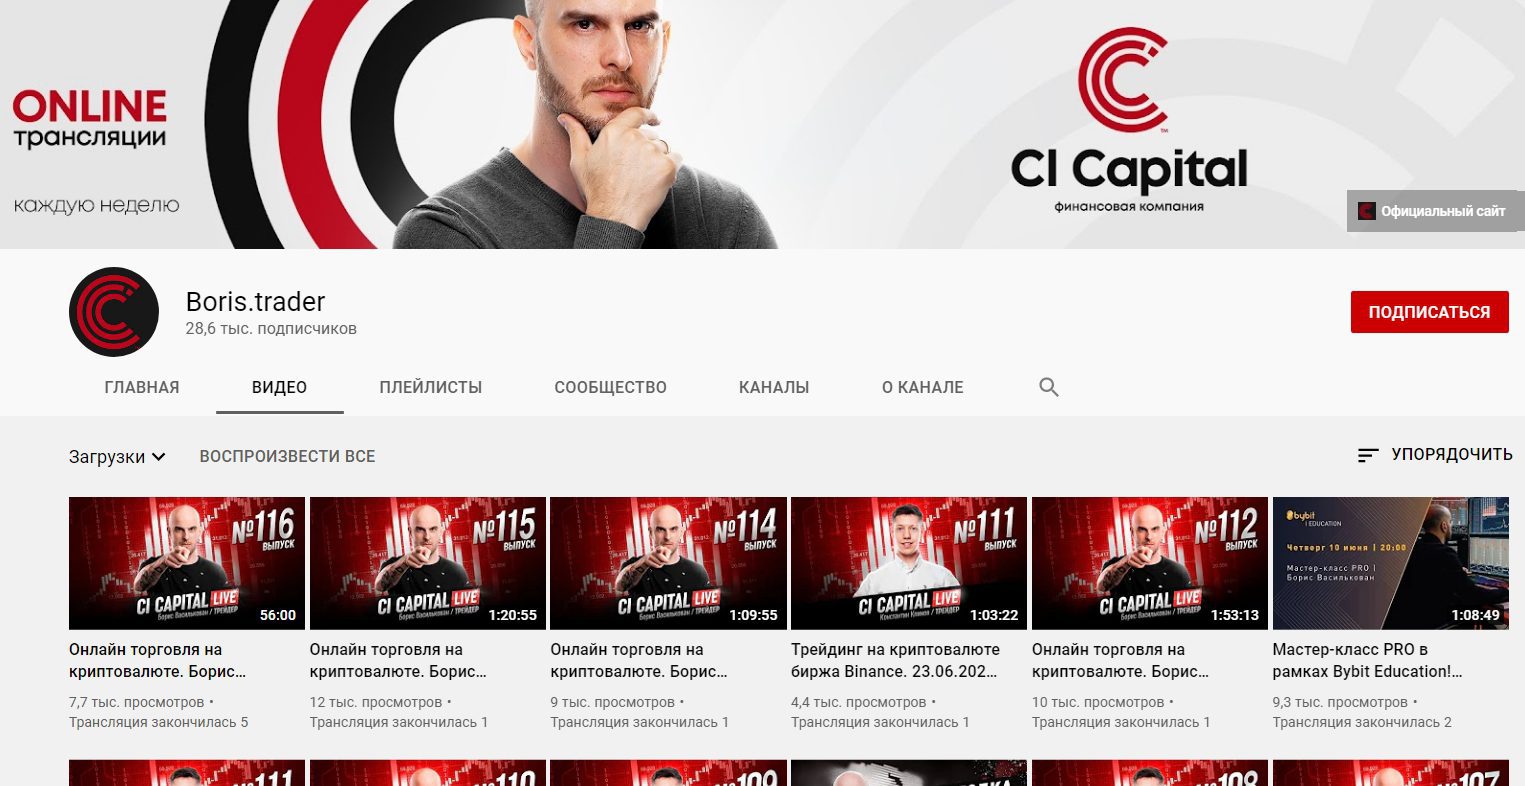 Ютуб-канал проекта CI capital